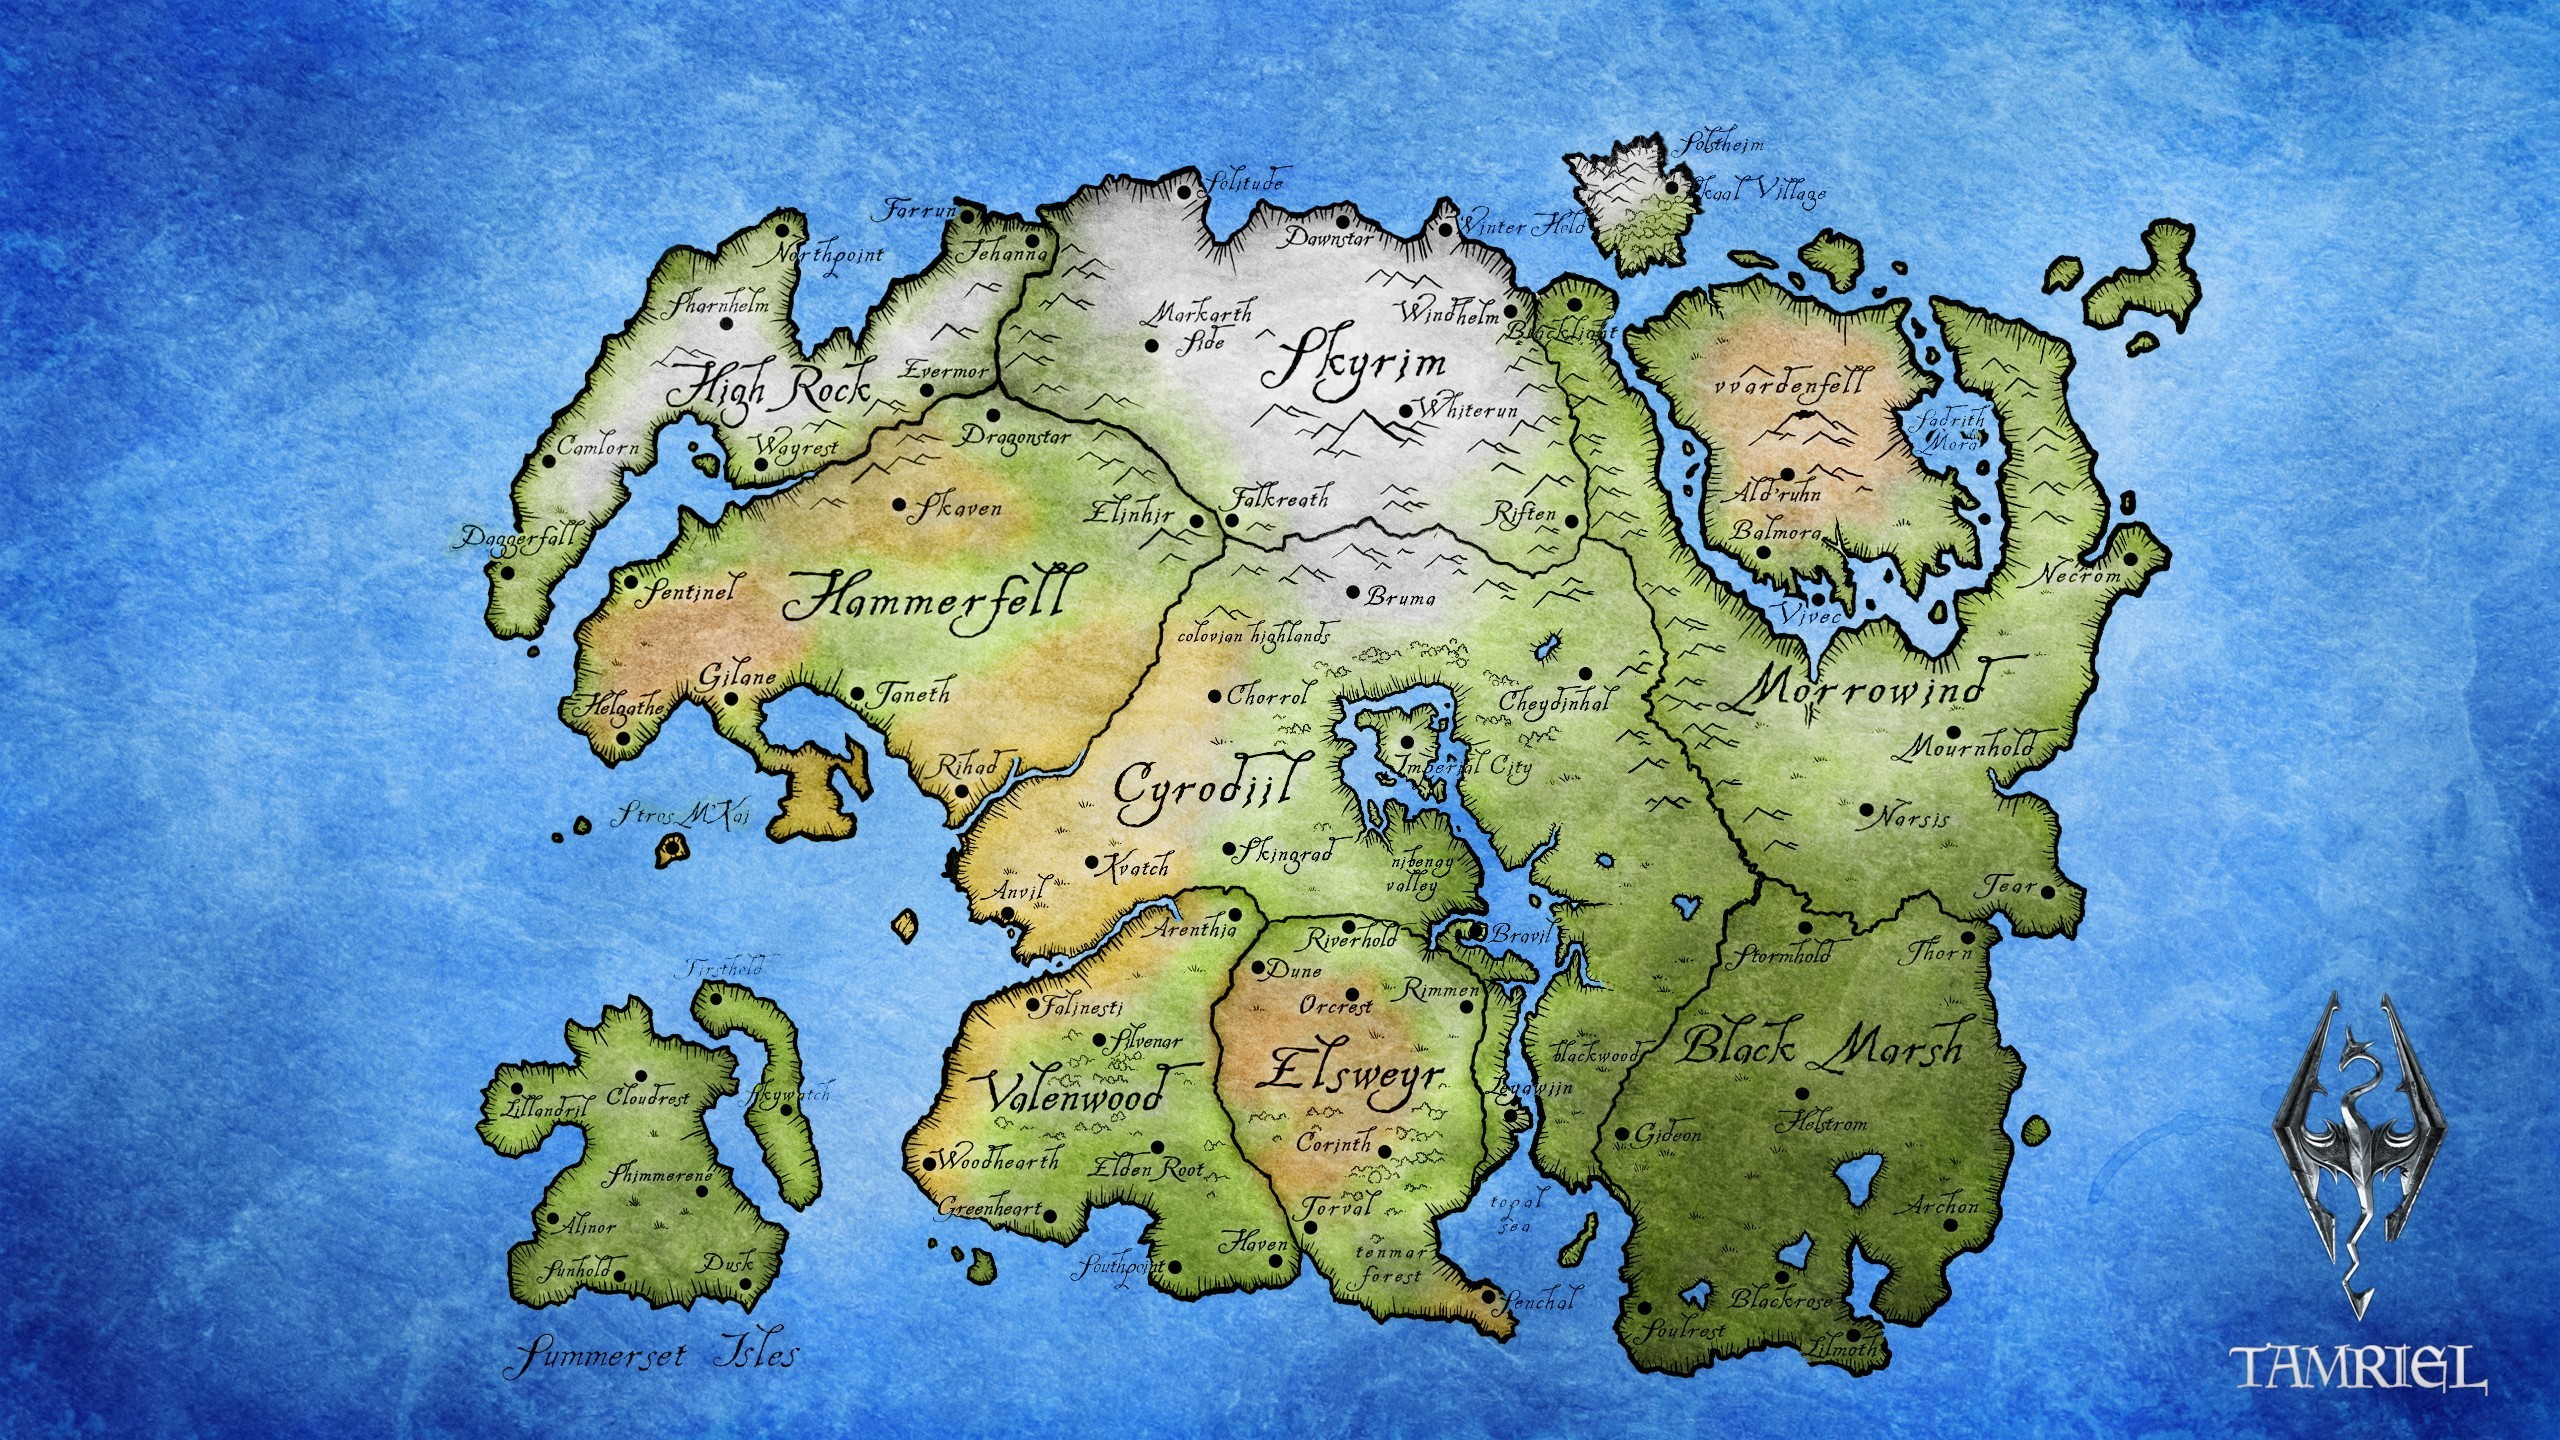 Elder Scrolls, Map, The Elder Scrolls V: Skyrim, The Elder Scrolls IV: Oblivion, The Elder Scrolls III: Morrowind, Tamriel Wallpaper